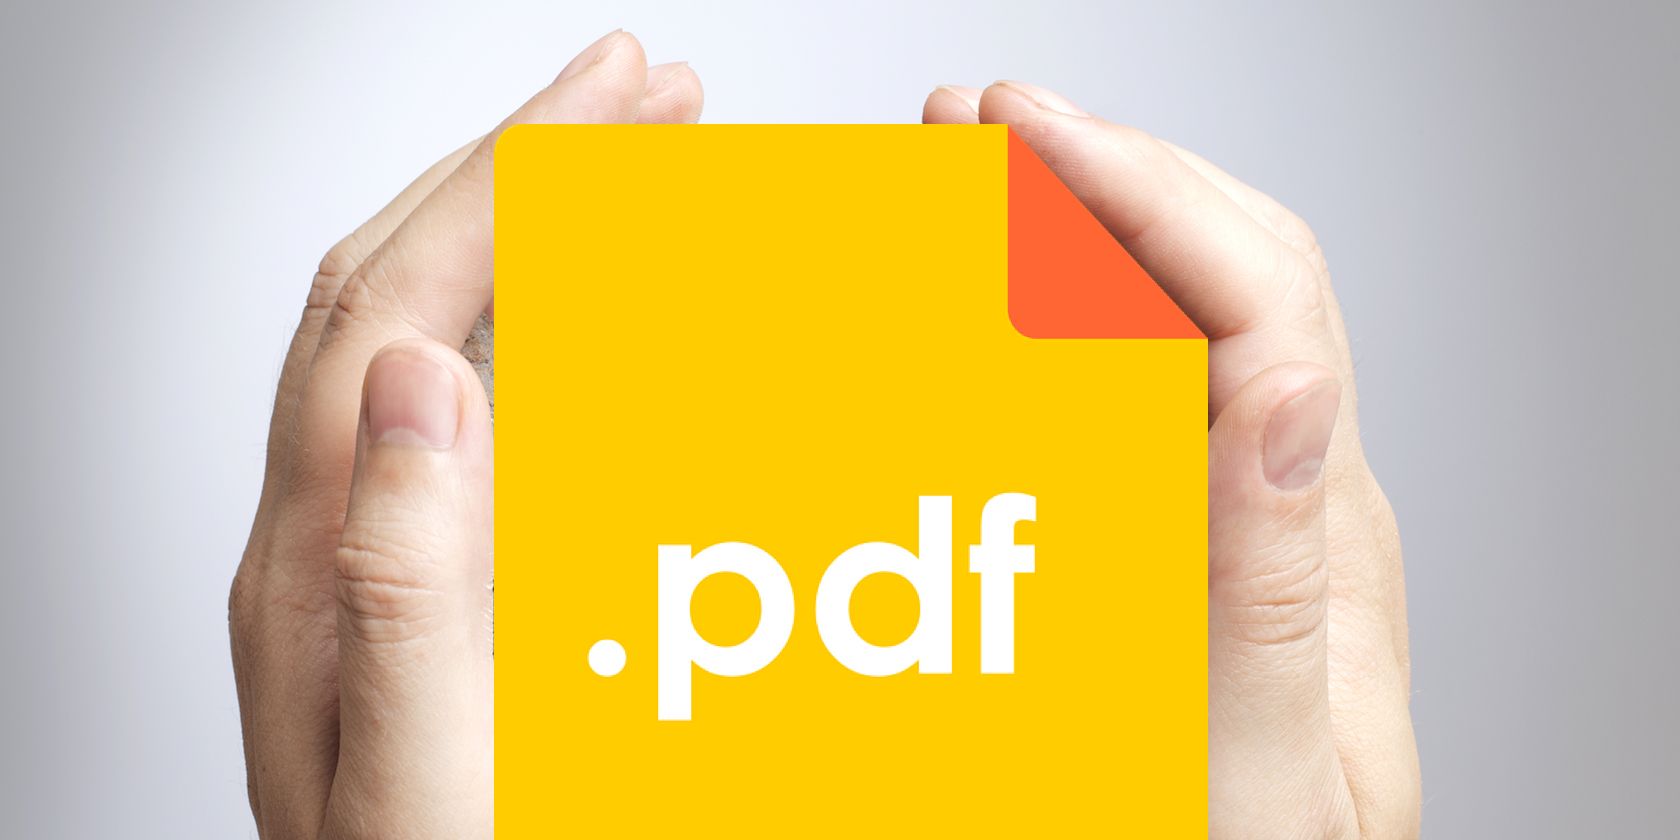 pdf size reducer below 100kb